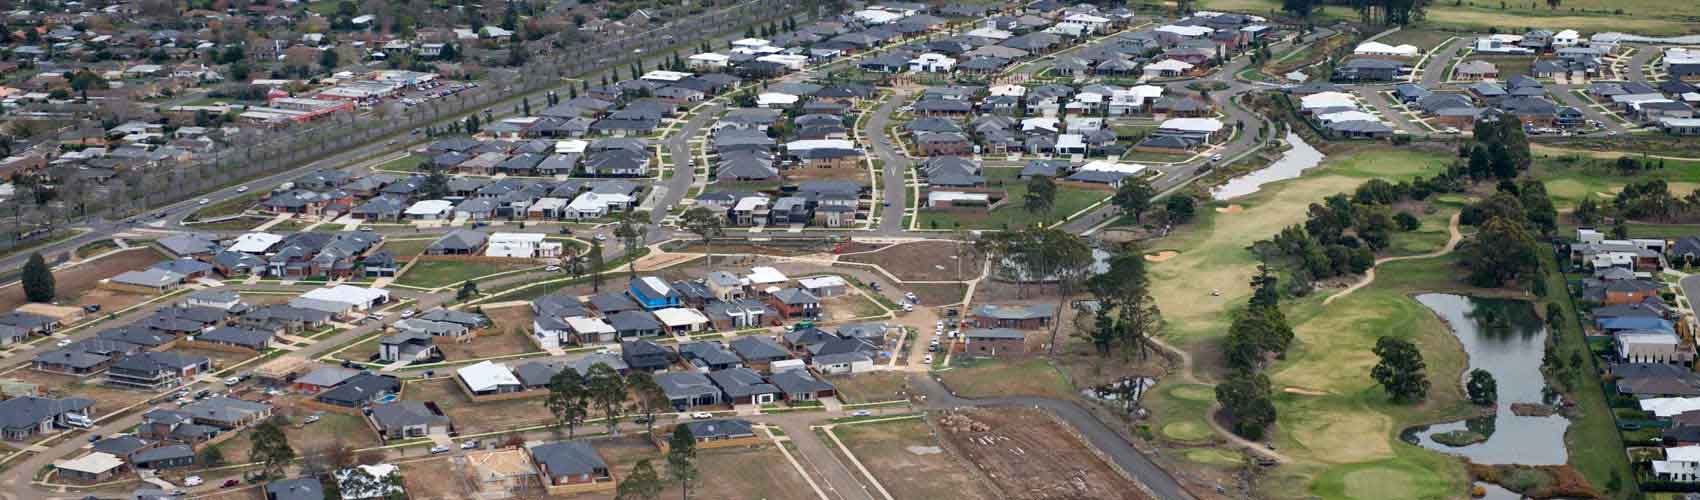 Housing development in Ballarat